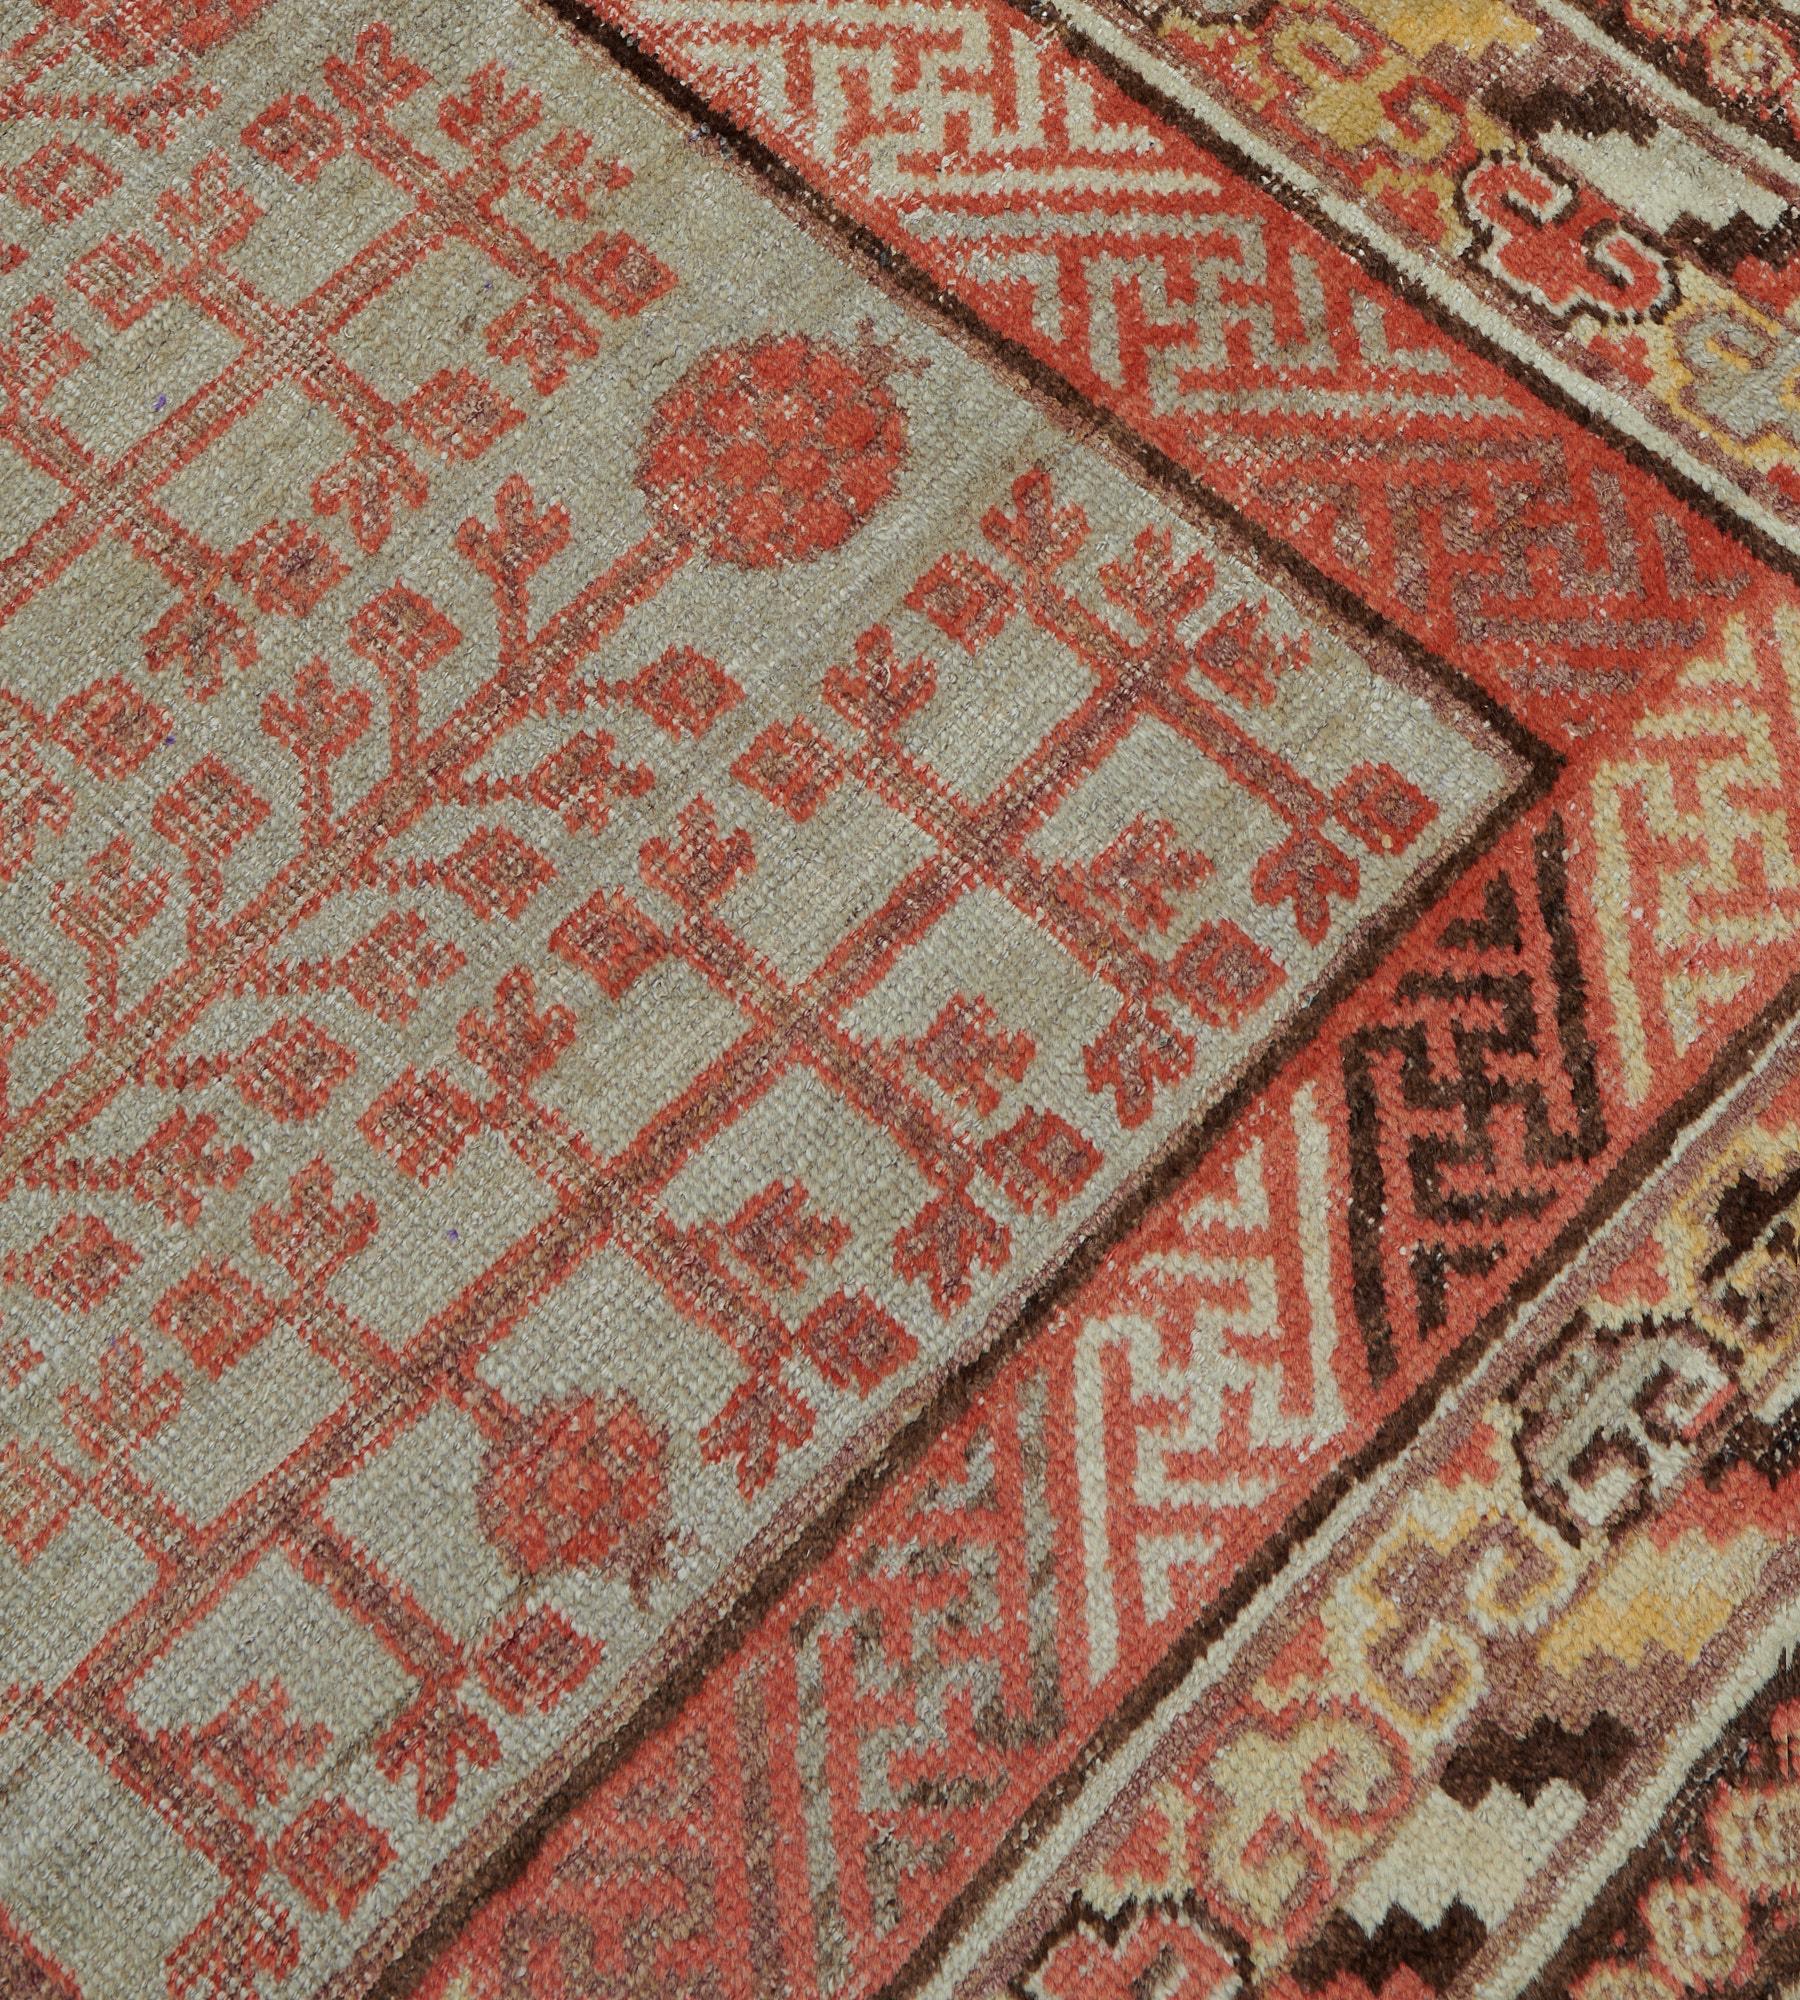 Hand-Woven Handmade Antique Circa-1880s Wool Pomegranate Khotan Rug  For Sale